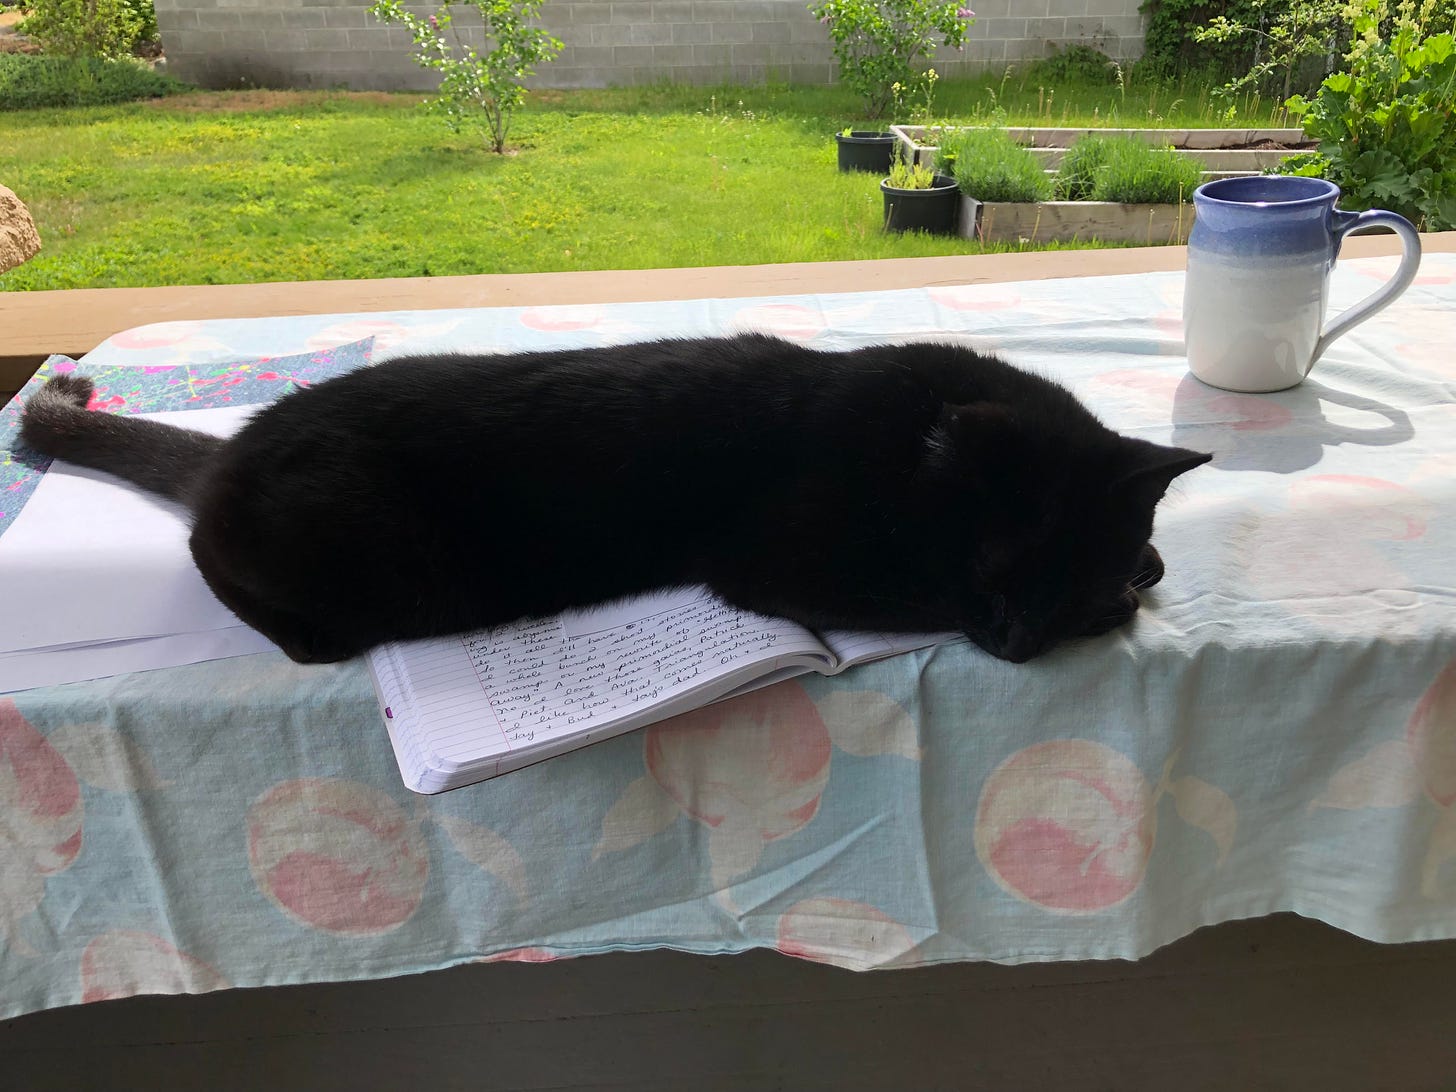 a Black cat sprawled across an open notebook on a sunny outdoor table.